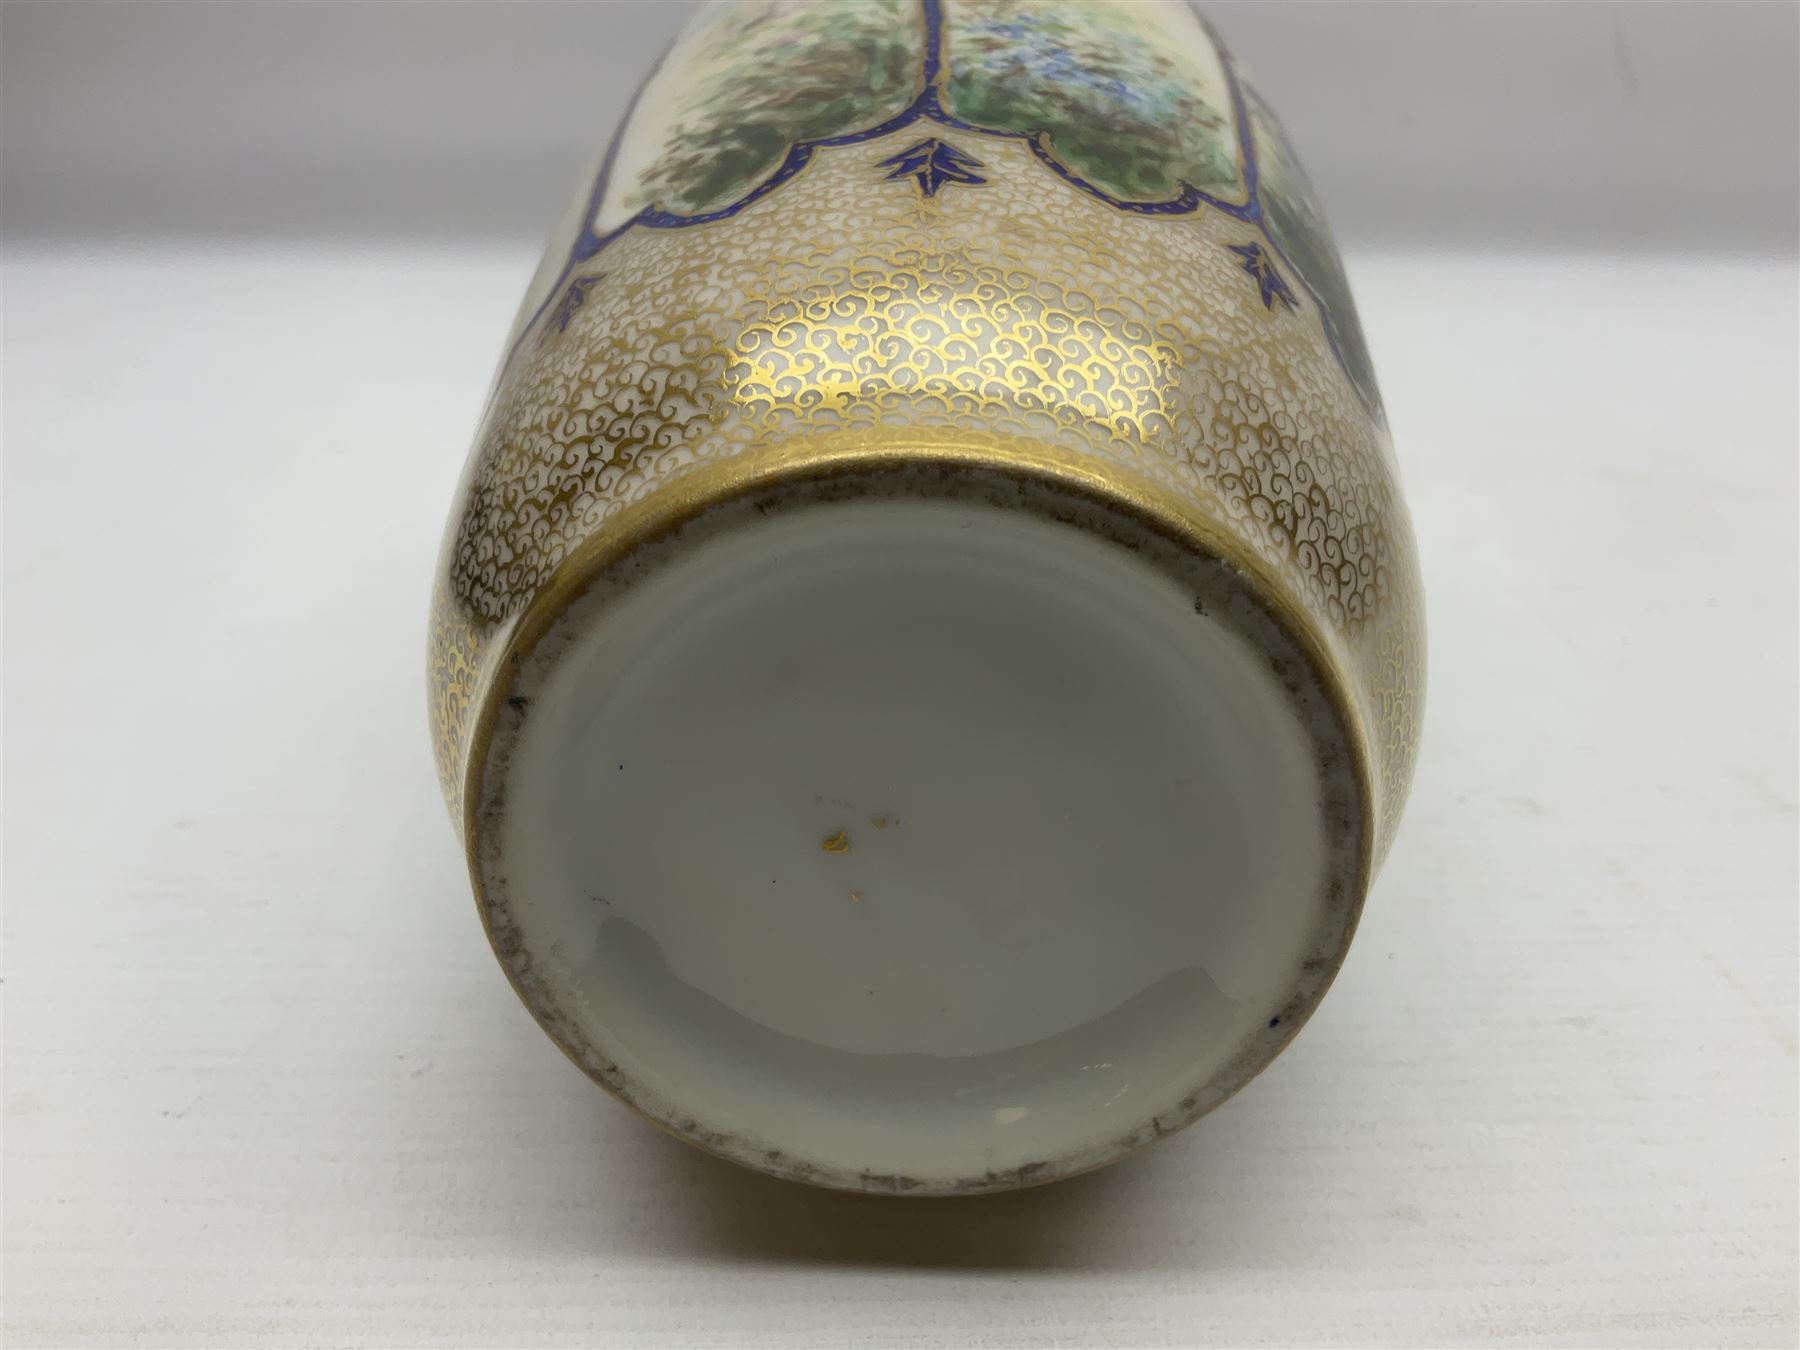 Old Tupton Ware ginger jar - Image 8 of 8